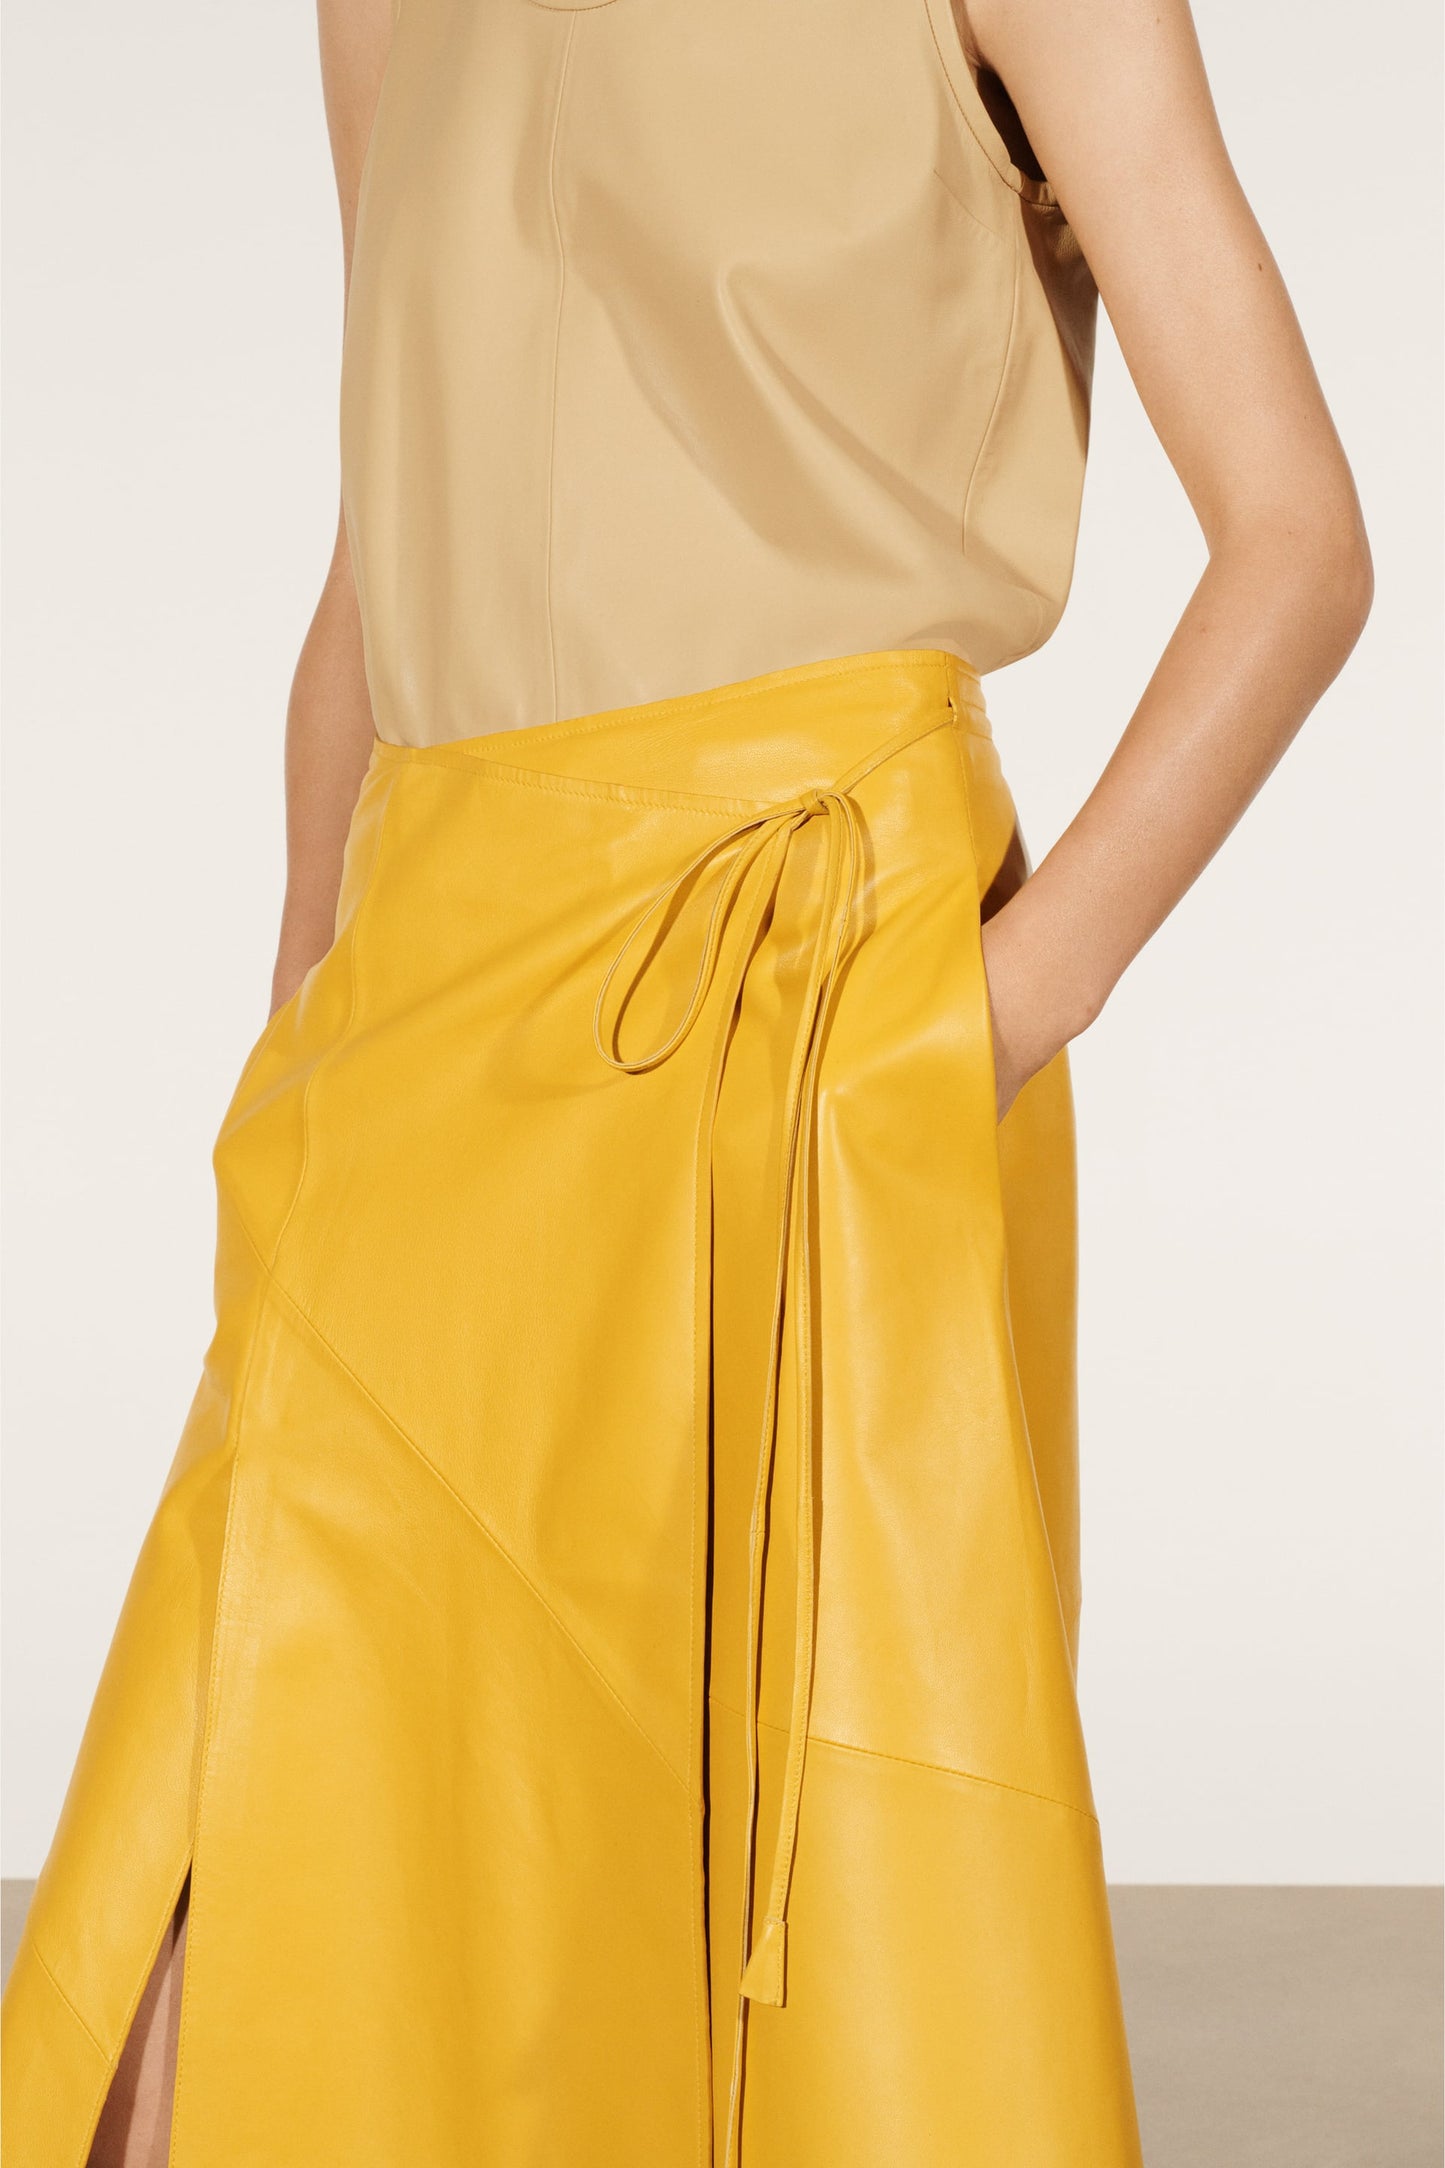 Leather pareo skirt